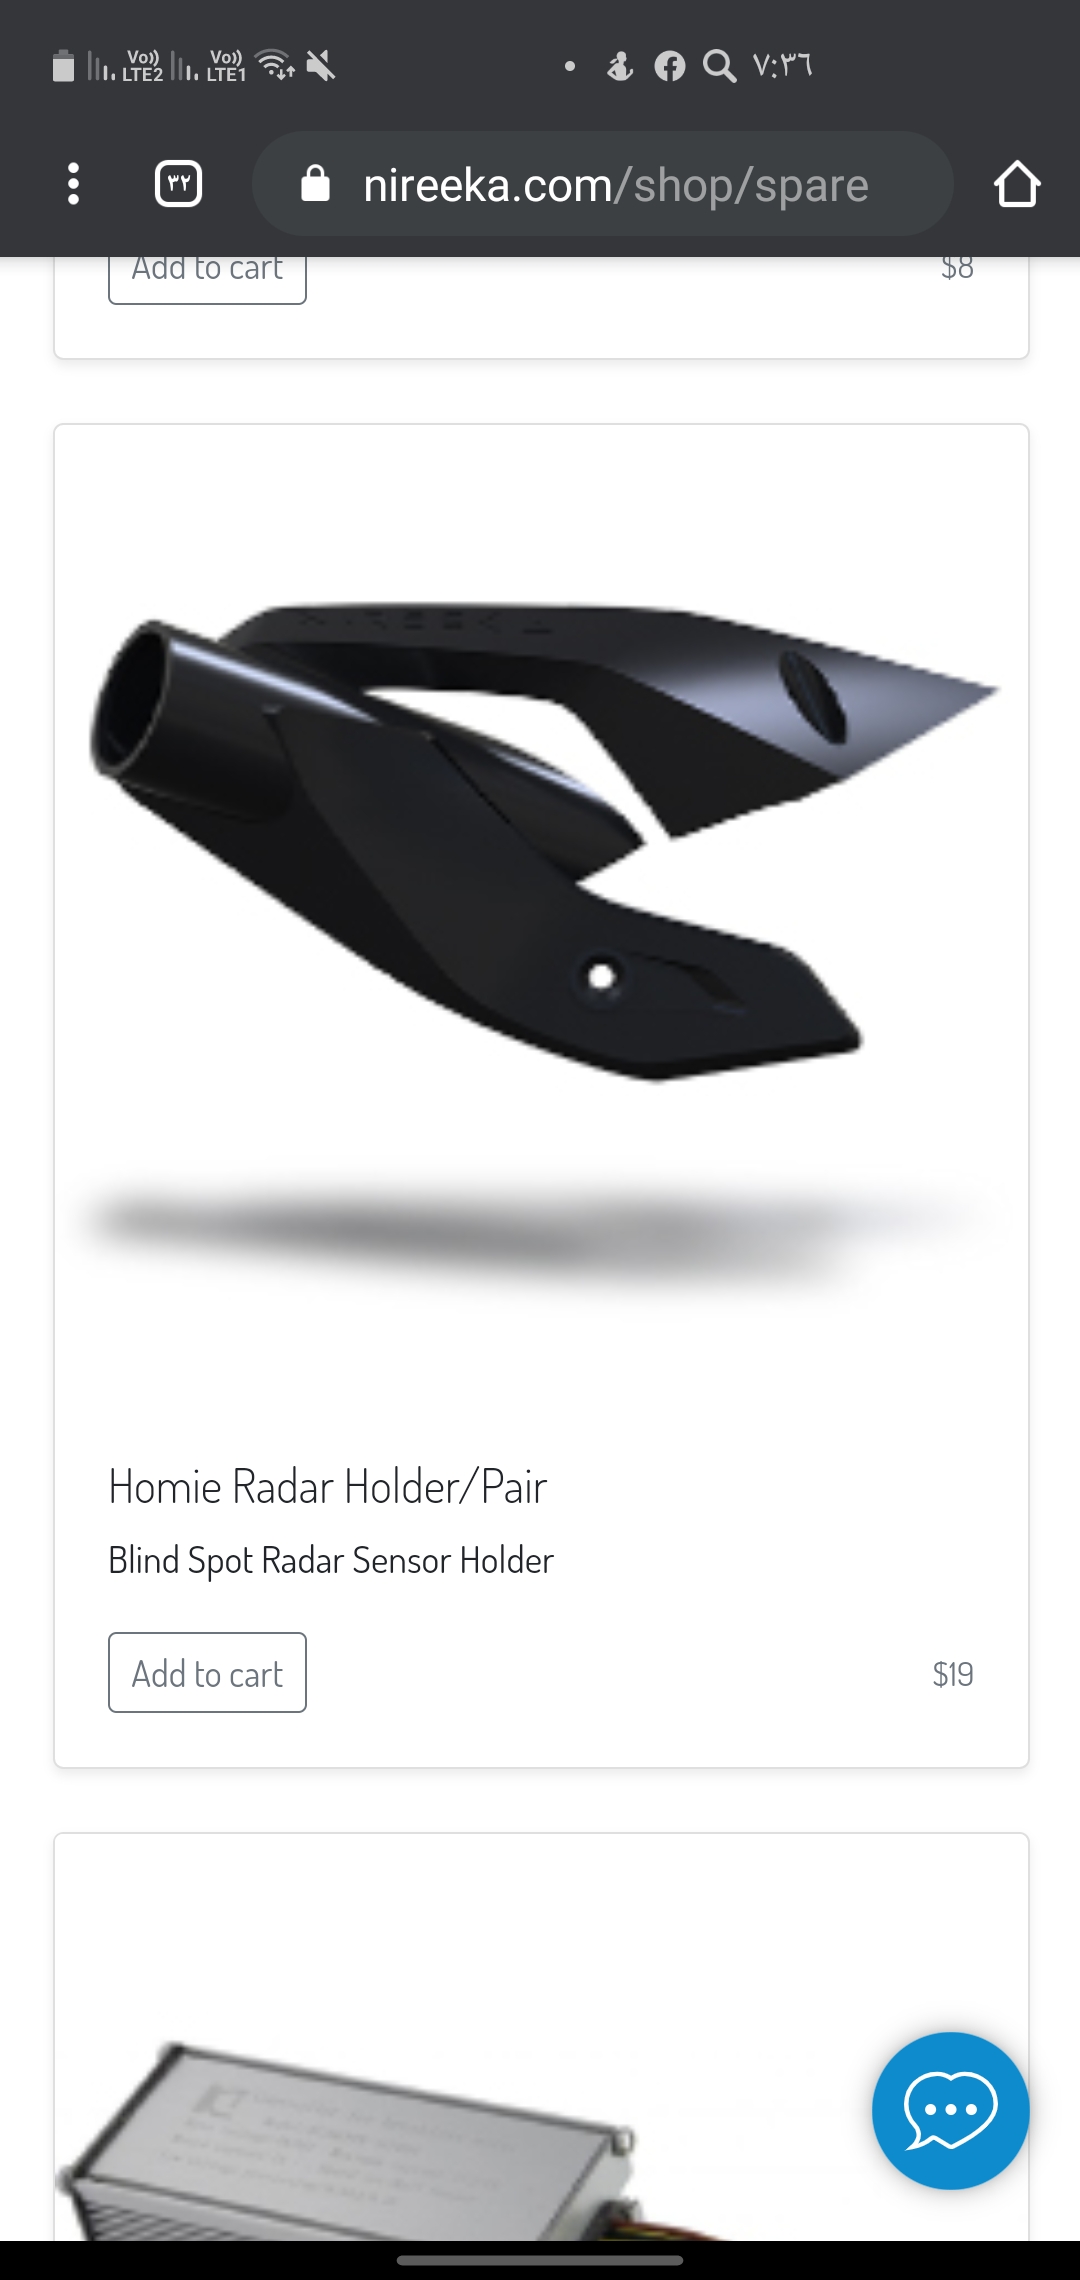 Homie Radar Holder/Pair